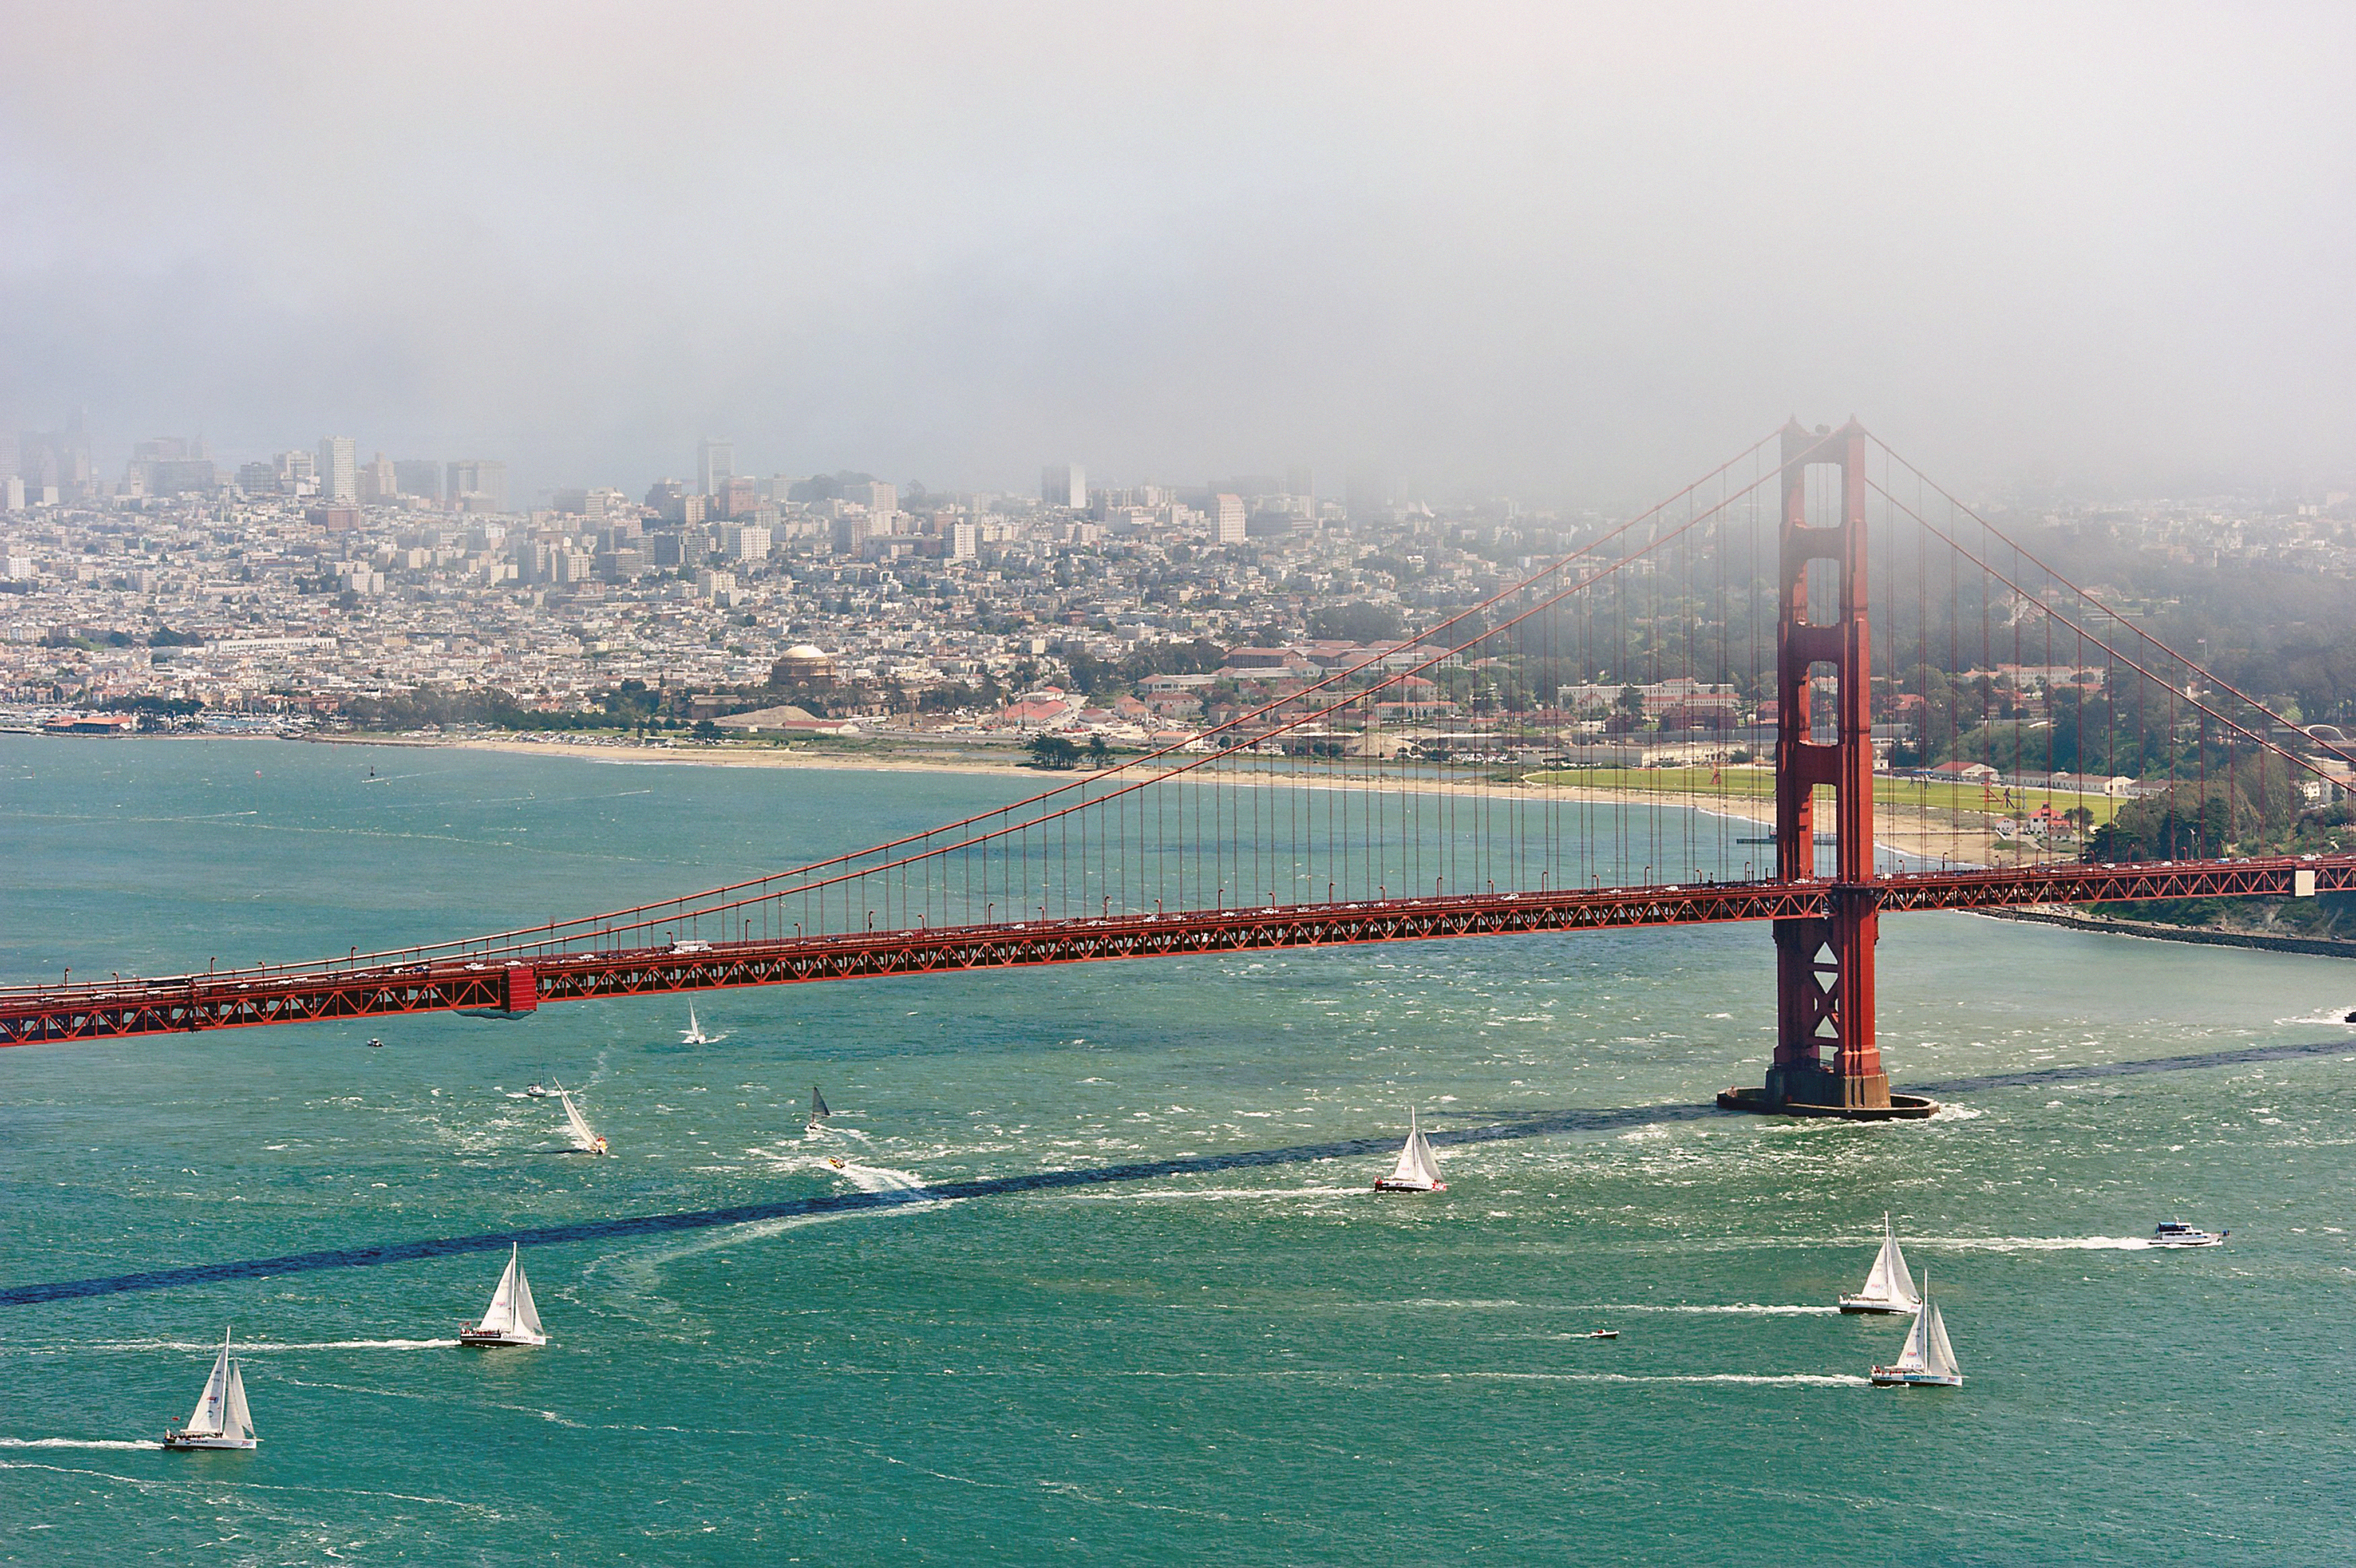 A yacht race takes place near the Golden Gate Bridge in San Francisco